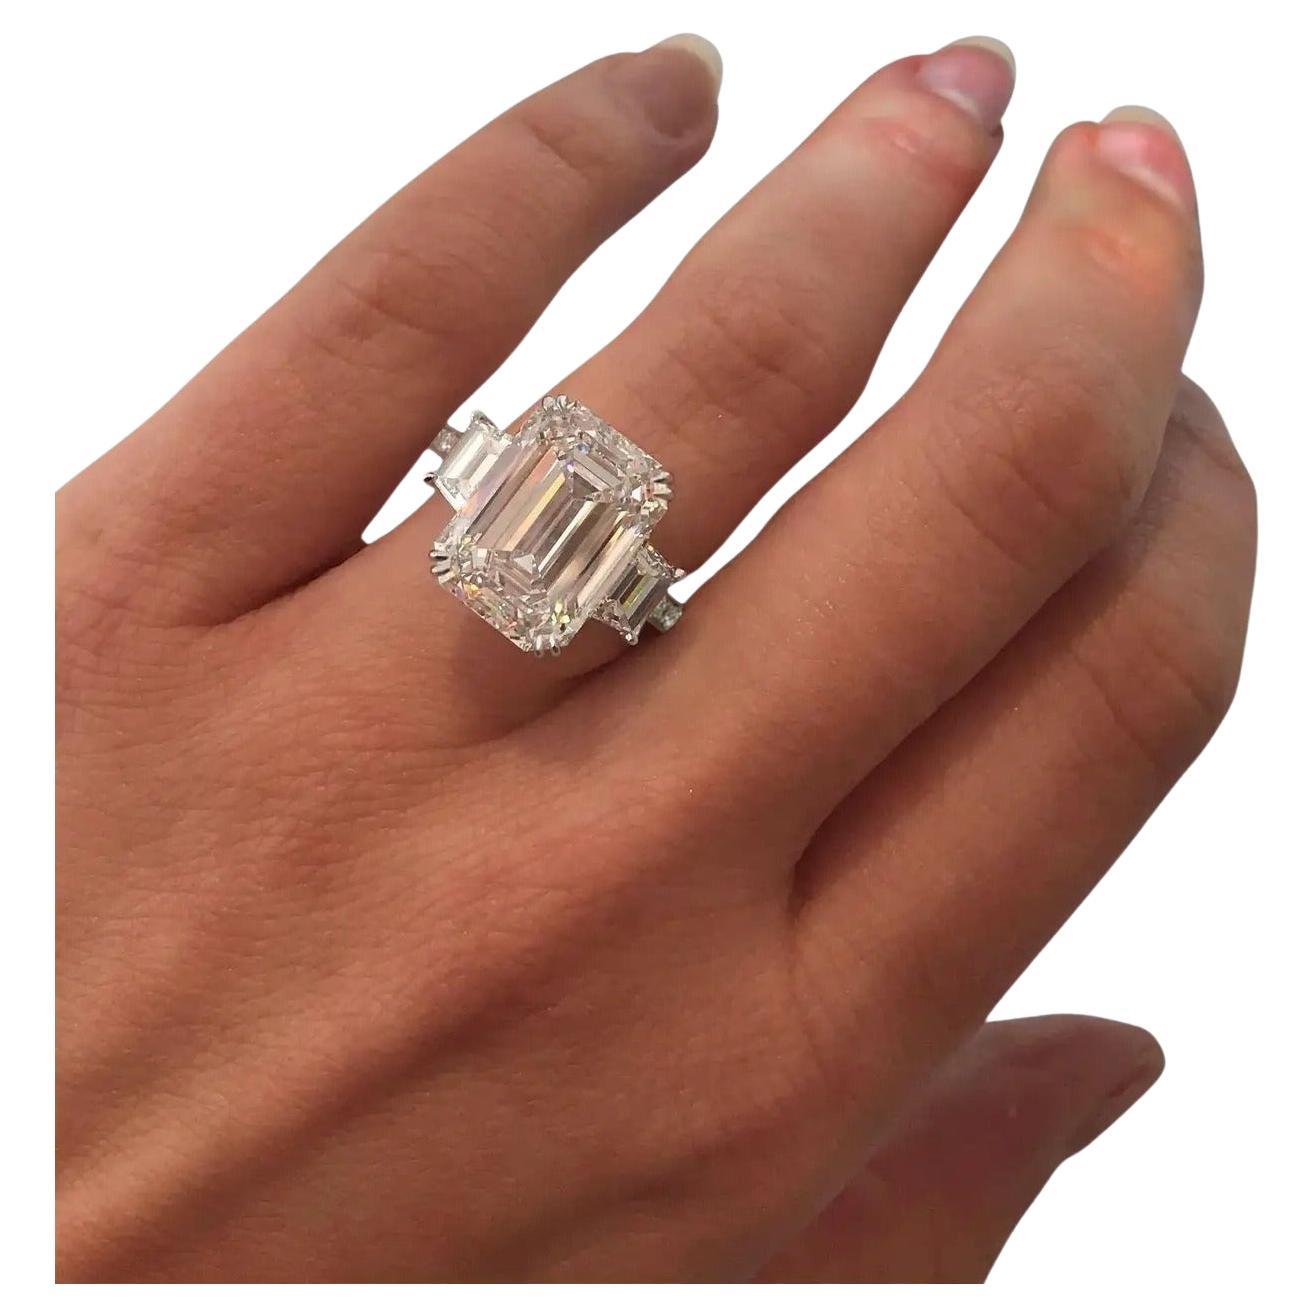 GIA Certified 4 Carat Emerald Cut Diamond Ring EYE CLEAN 100% For Sale